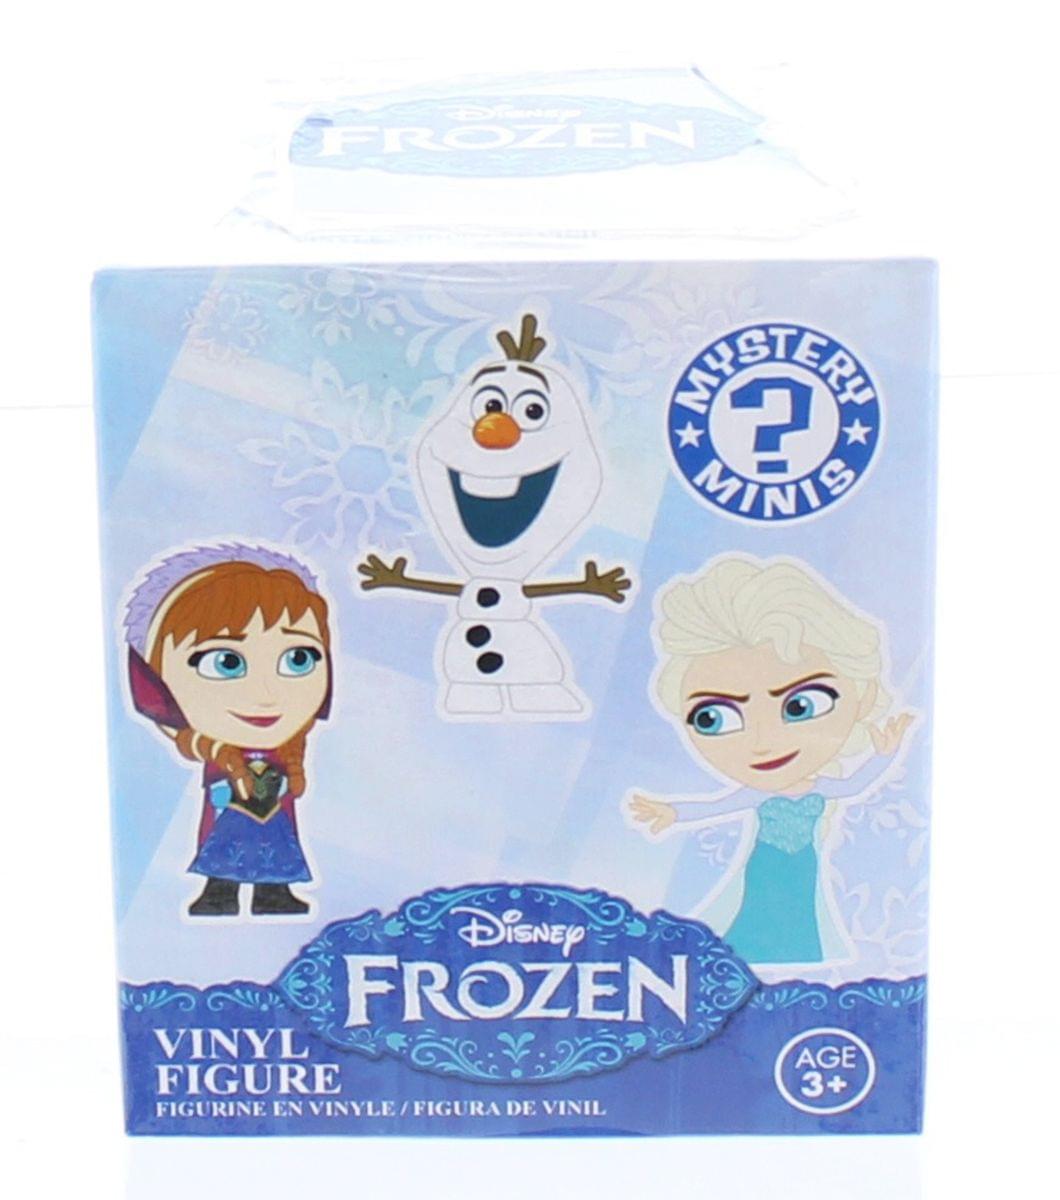 Disney's Frozen Funko Minis Vinyl Figures Blind Box